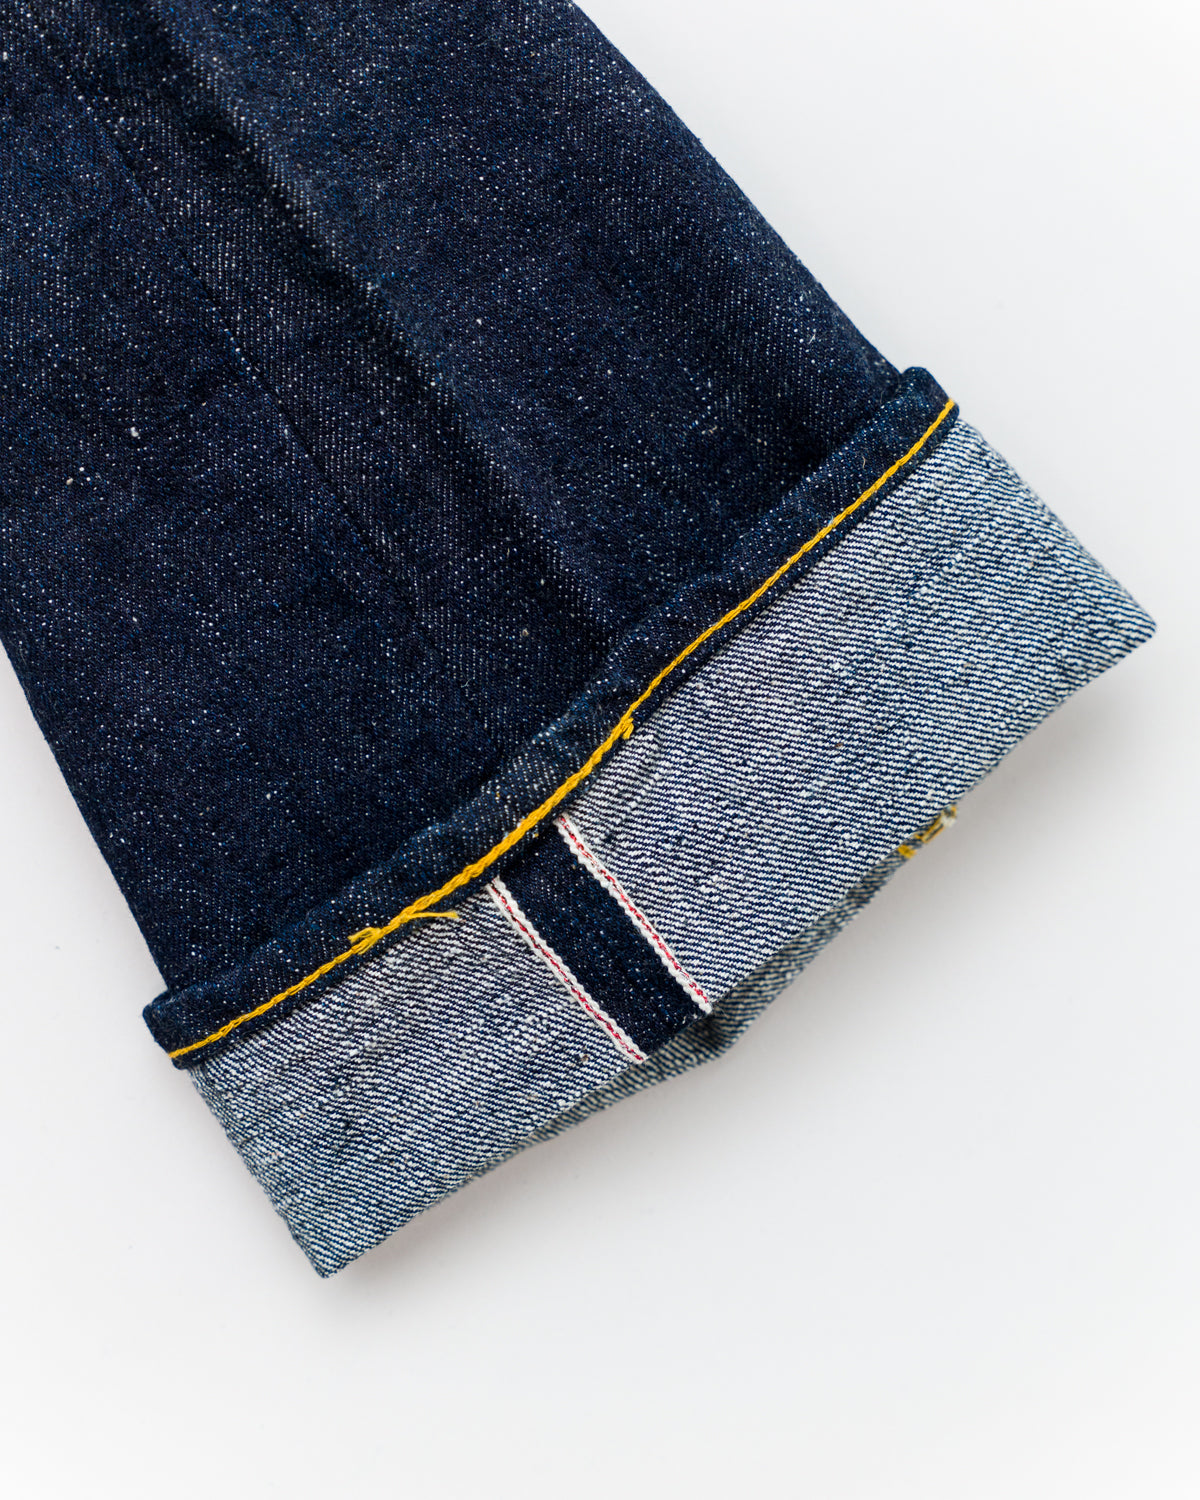 Samurai Jeans S5000VXII 17oz Bushido Selvedge Jeans – Classic Straight